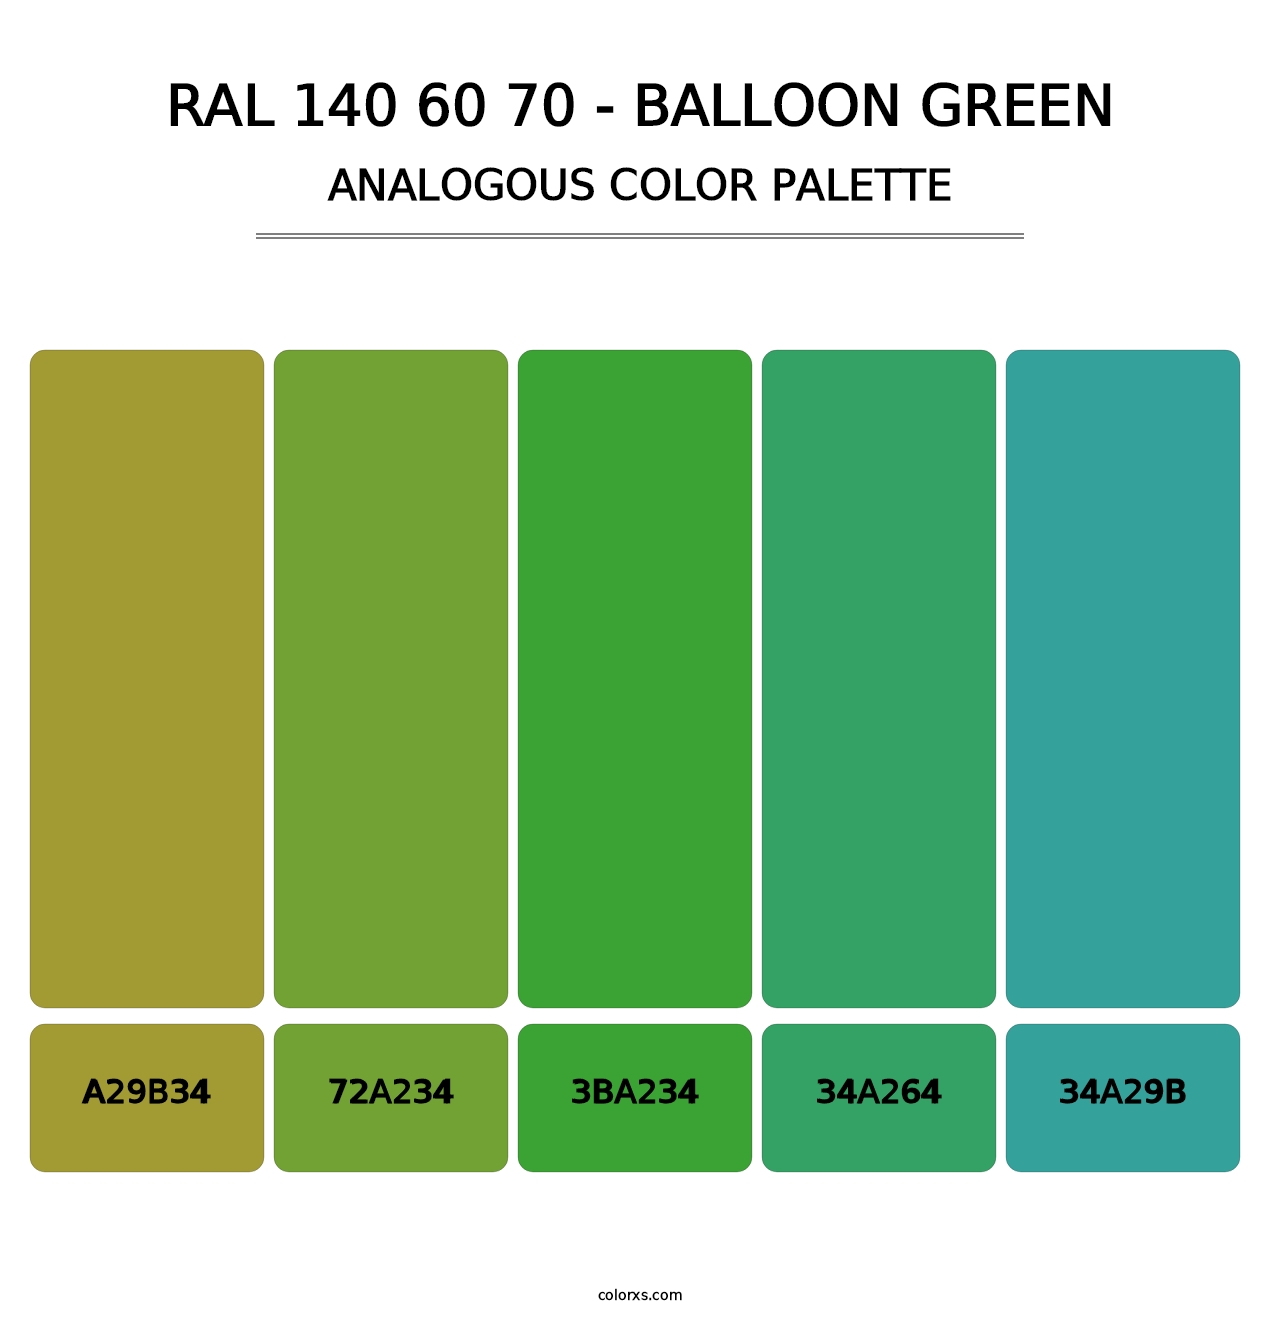 RAL 140 60 70 - Balloon Green - Analogous Color Palette